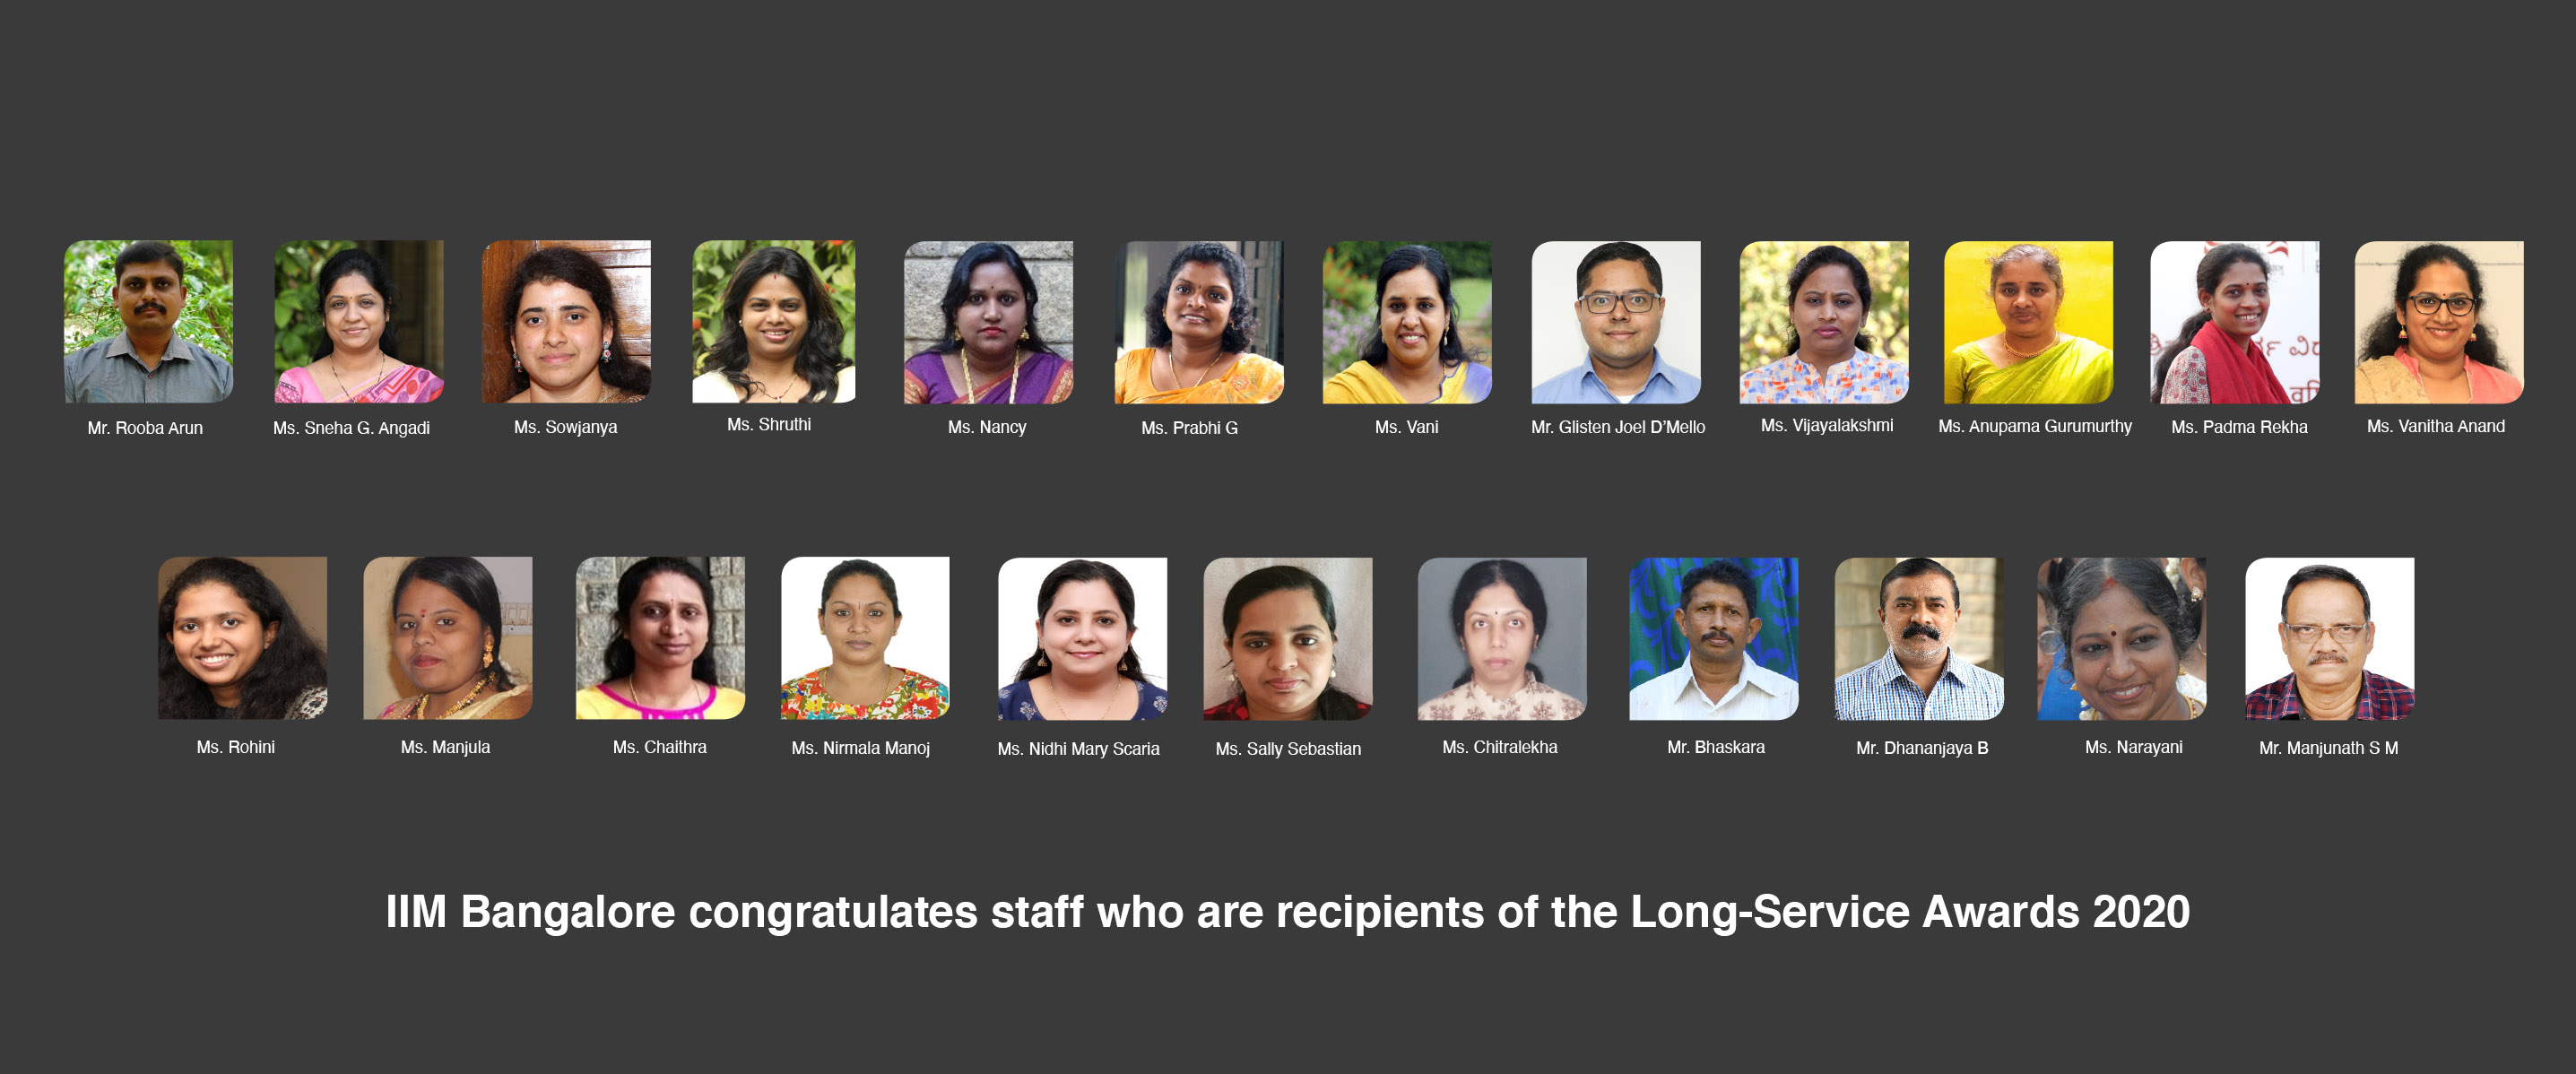 IIM Bangalore congratulates staff who are recipients of the Long-Service Awards 2020